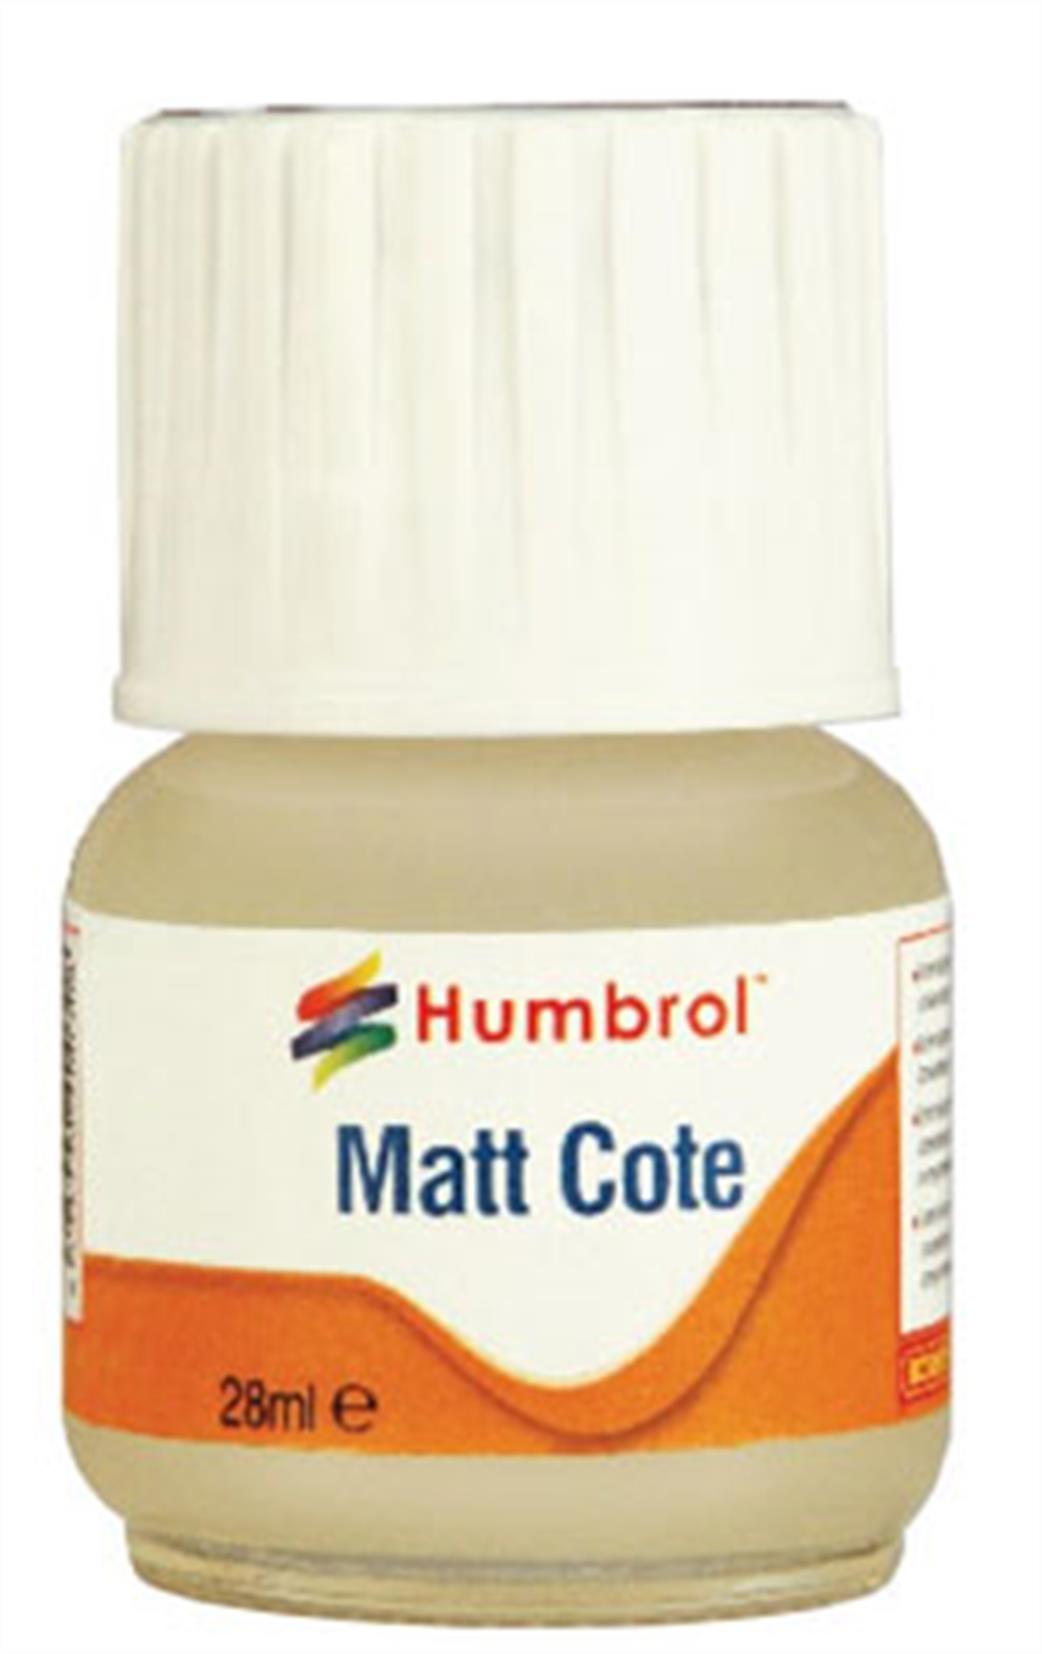 Humbrol AC5601 Modelcote Matt Cote Varnish 28ml Bottle